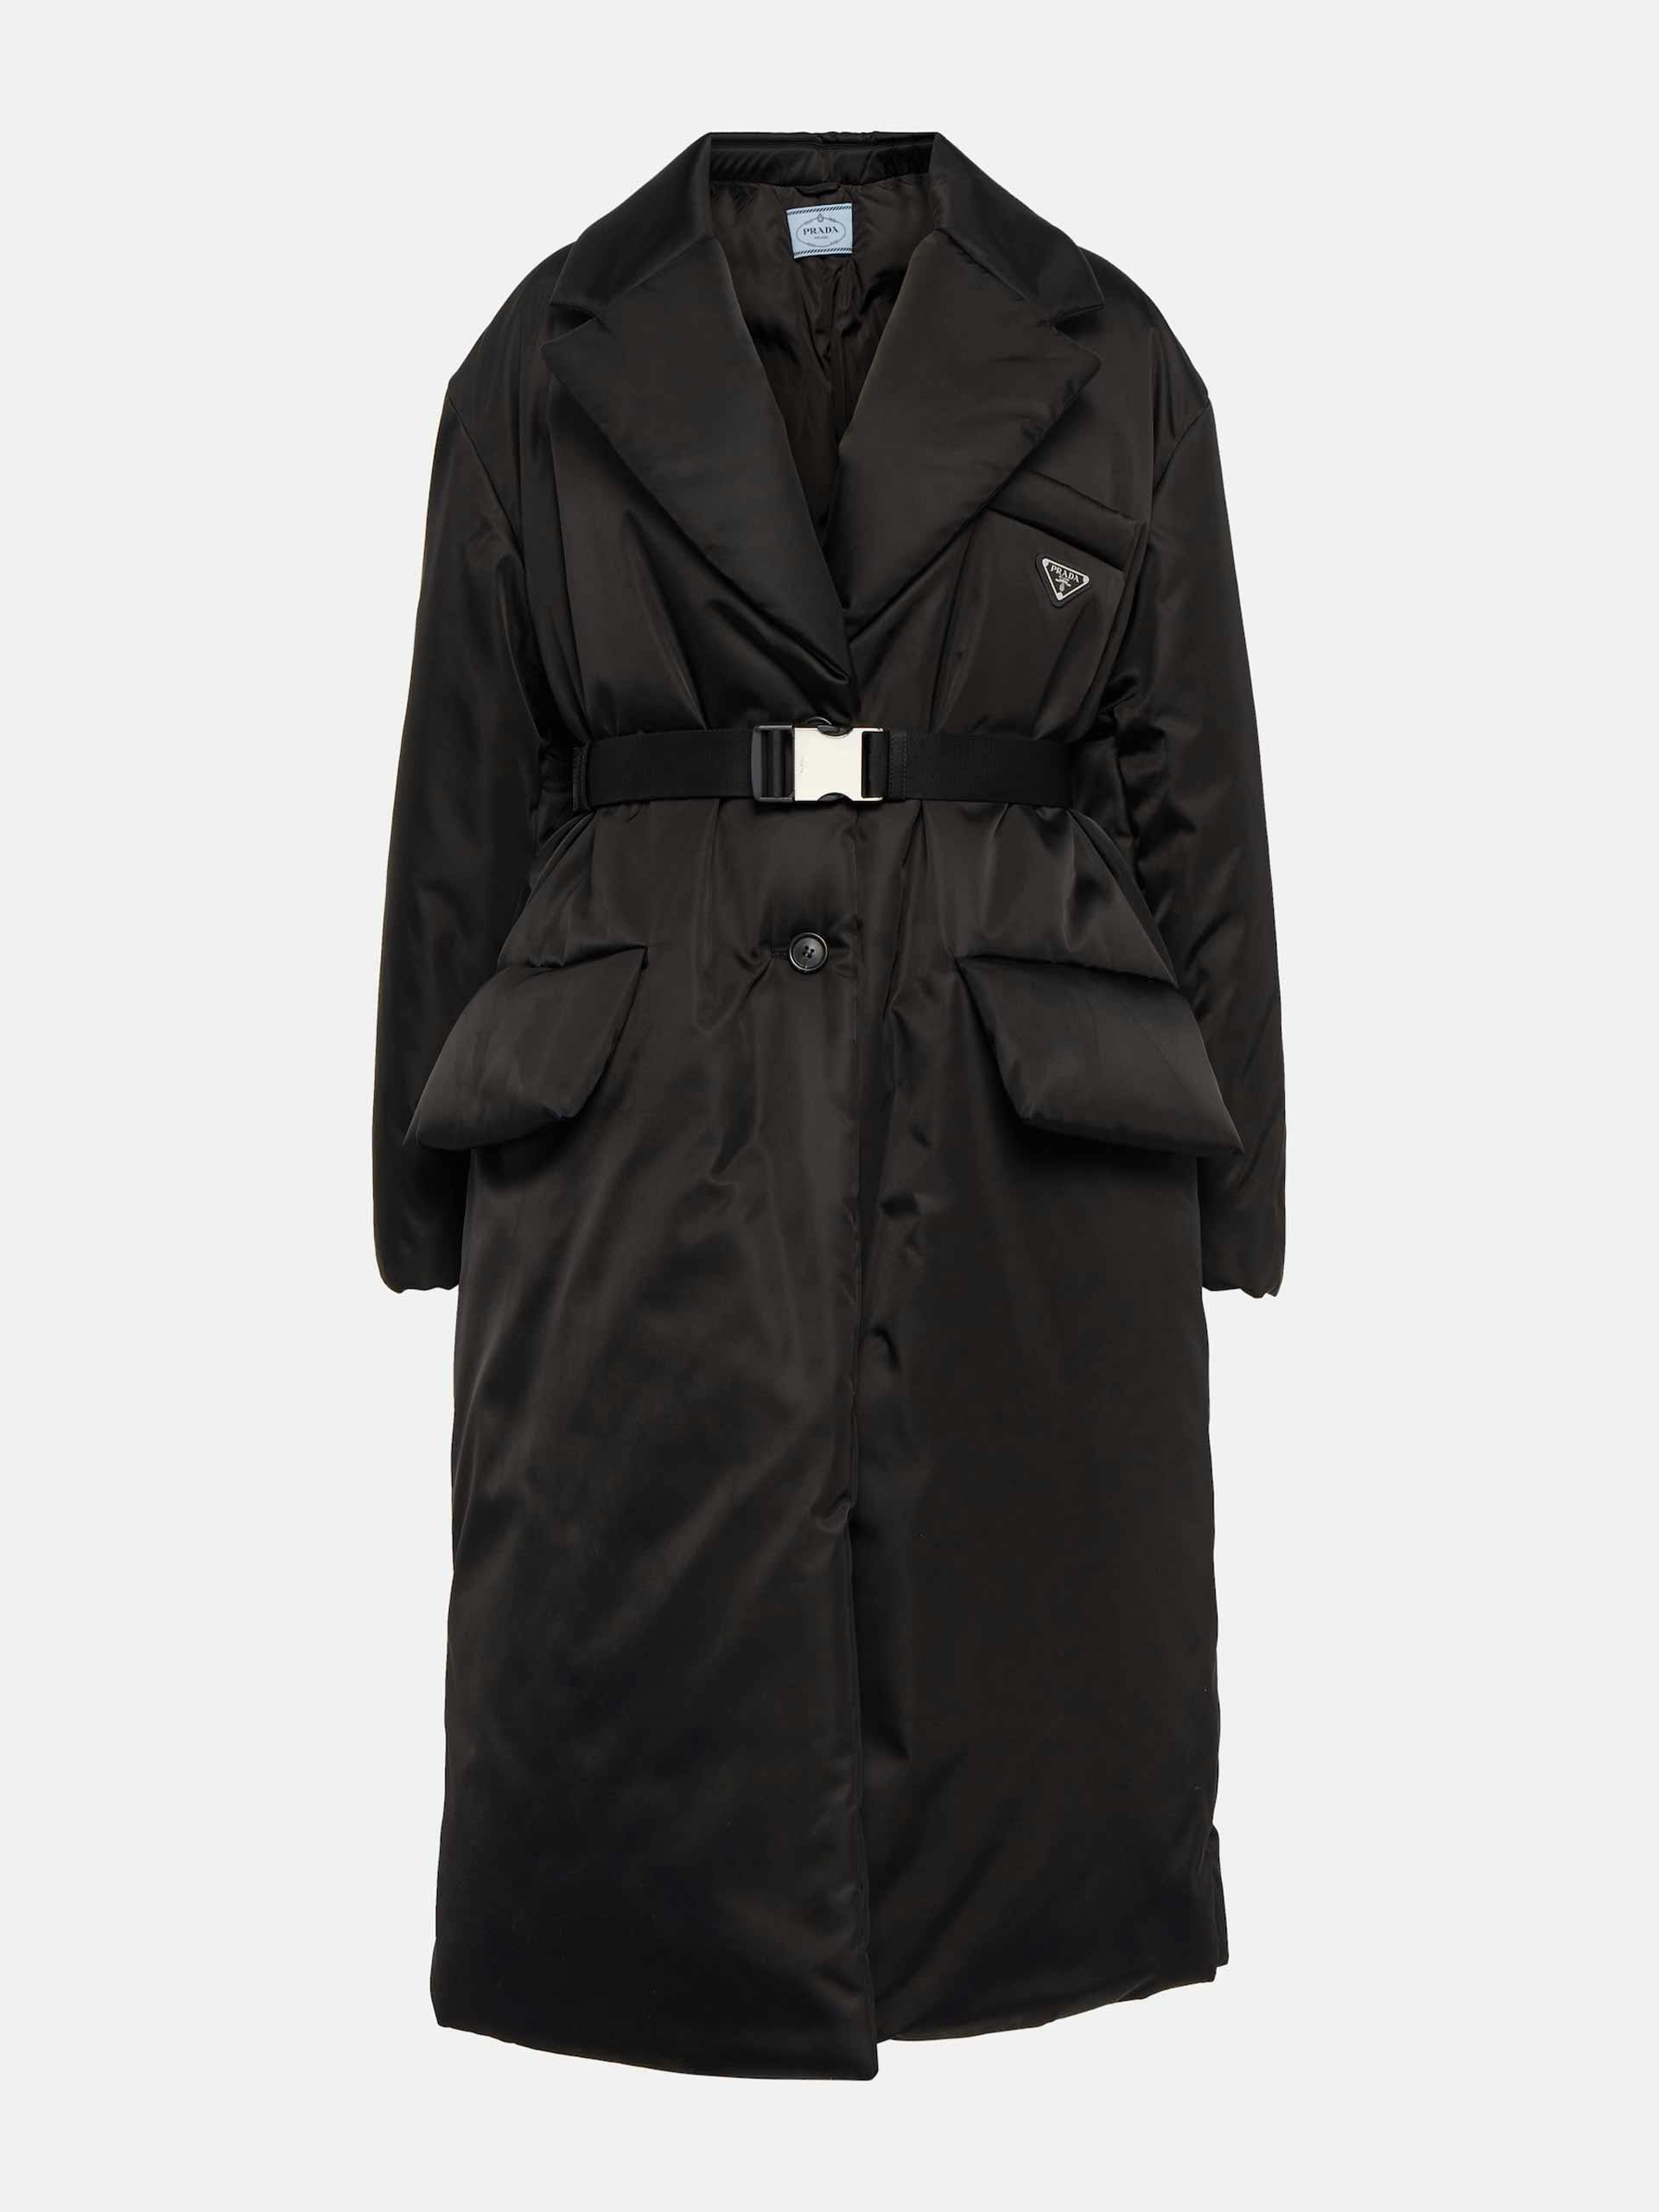 Black nylon puffer jacket